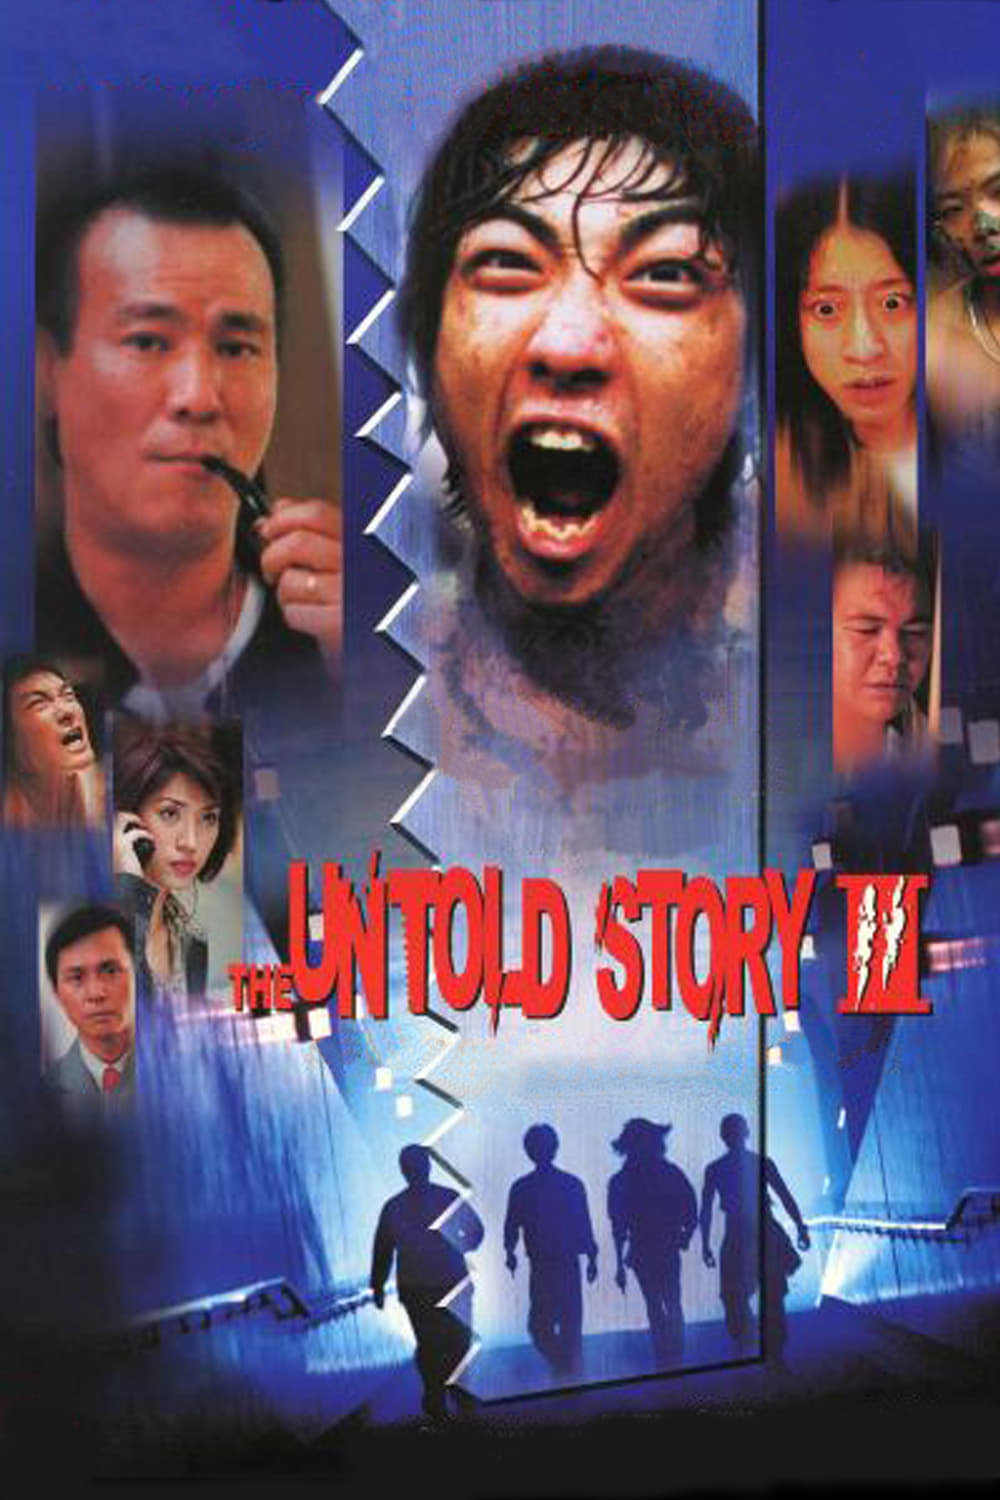 The Untold Story III (1999)